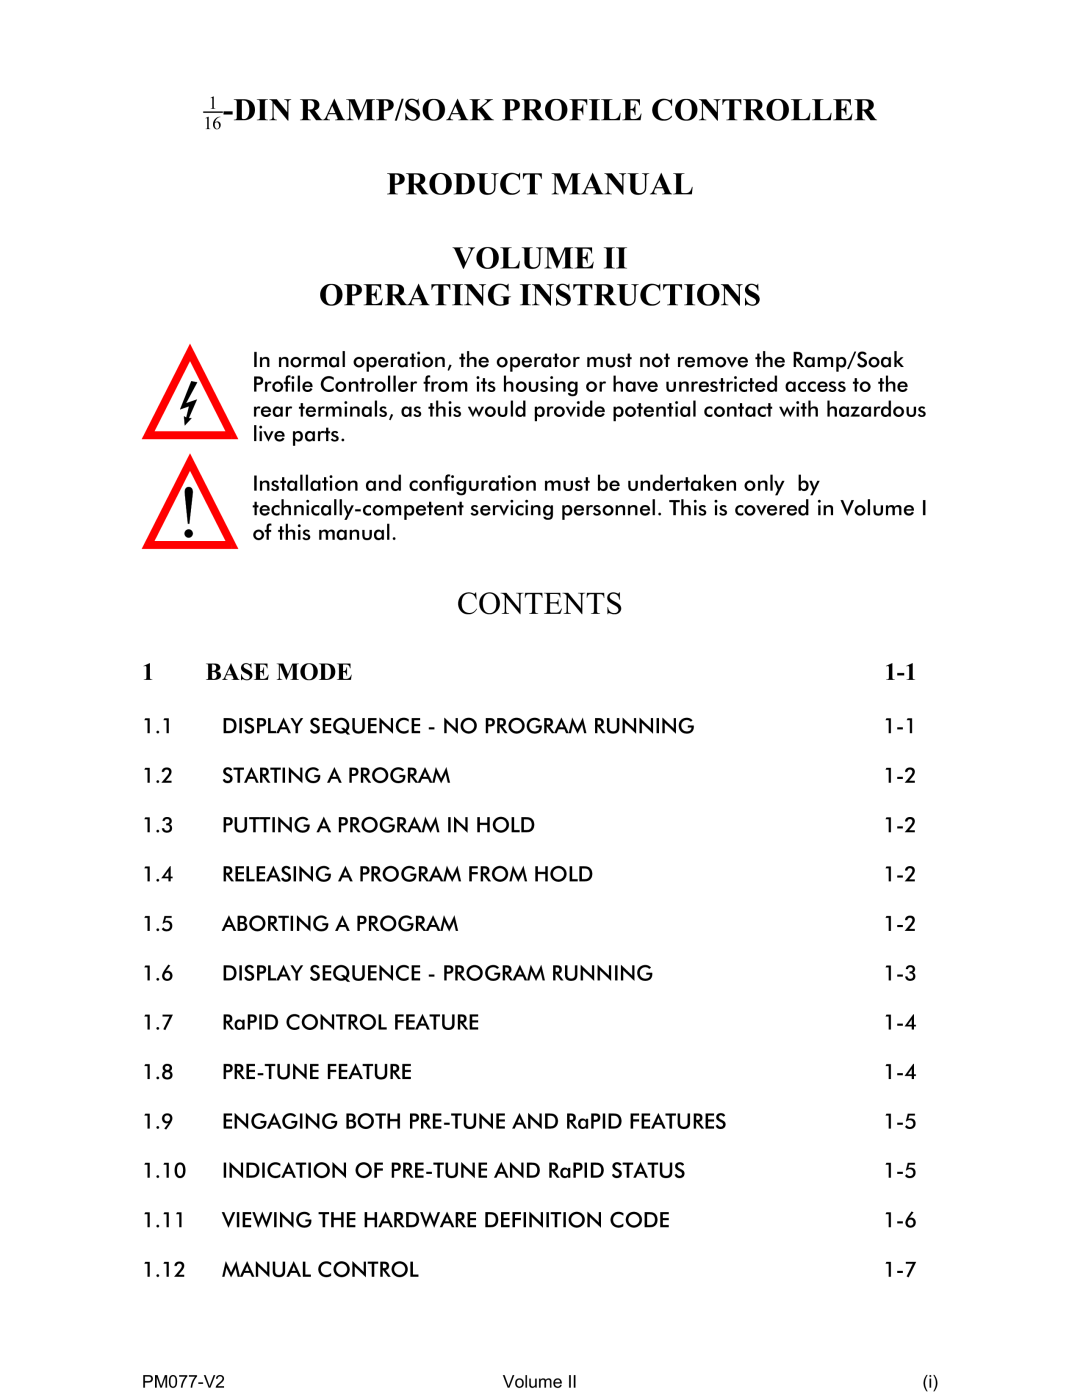 Omega CN1166 manual Operating Instructions, Base Mode, Din Ramp/Soak Profile Controller Product Manual Volume, Contents 